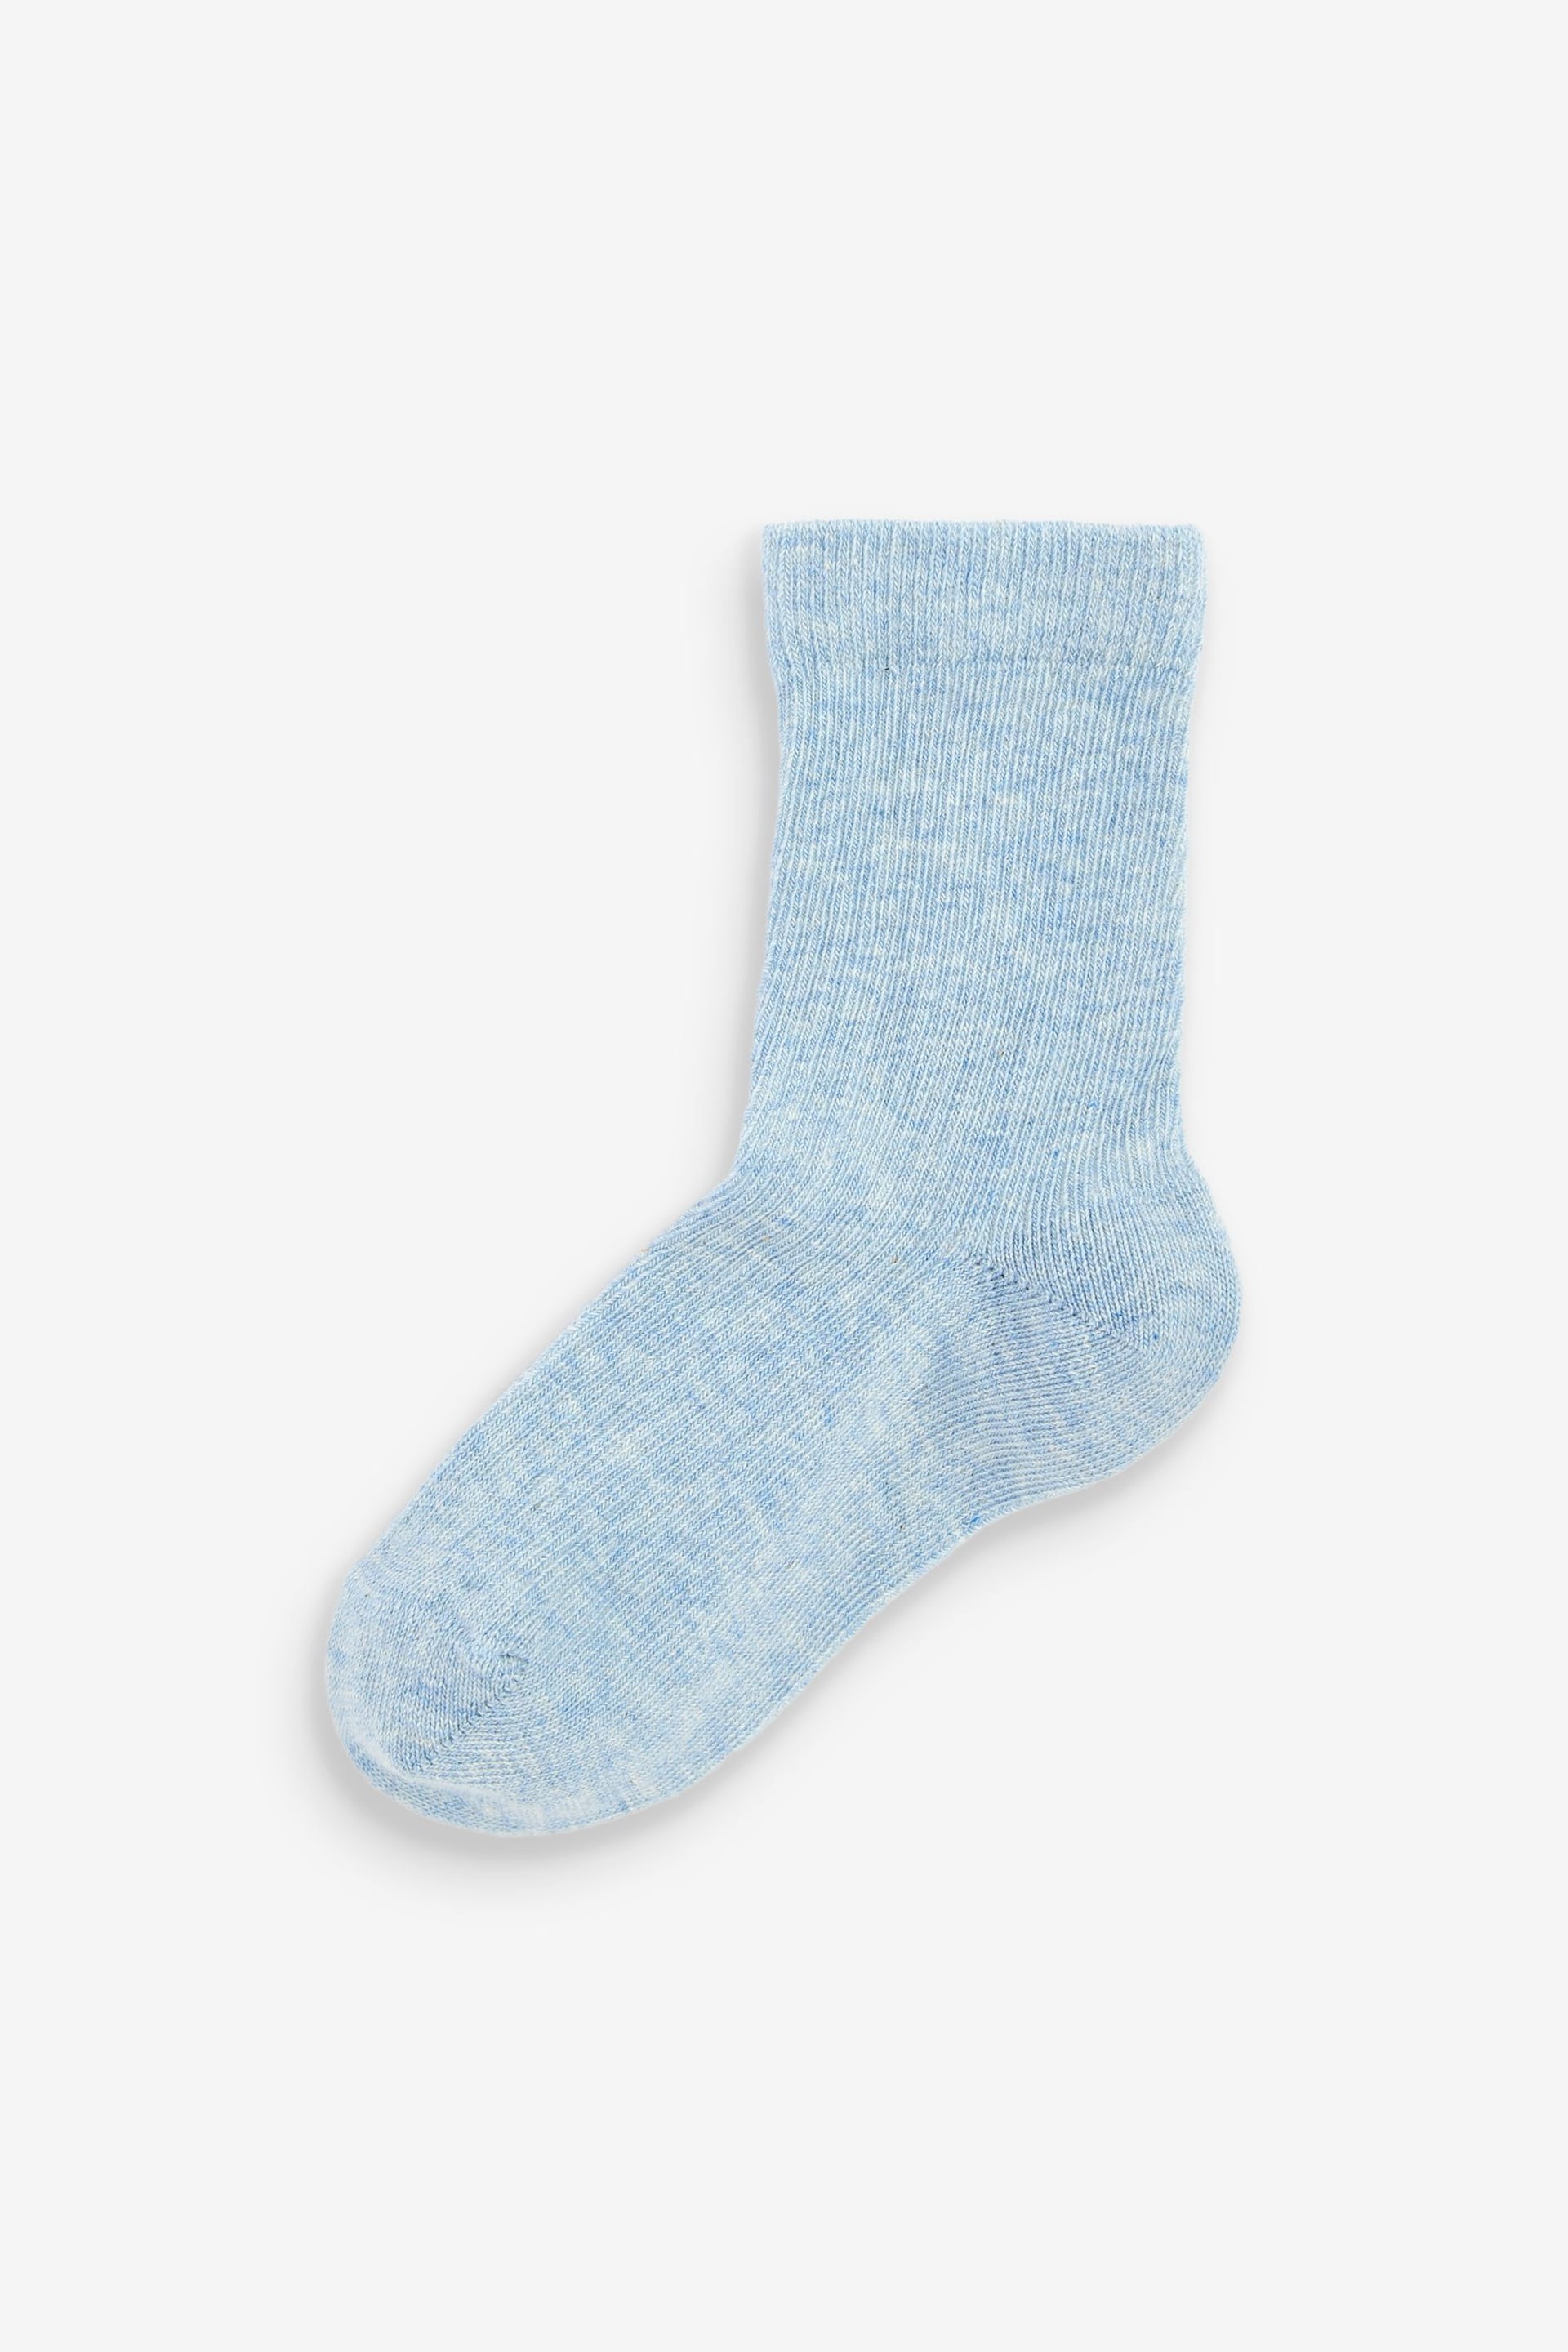 Blue/Navy Cotton Rich Fine Rib Socks 7 Pack - Image 6 of 8